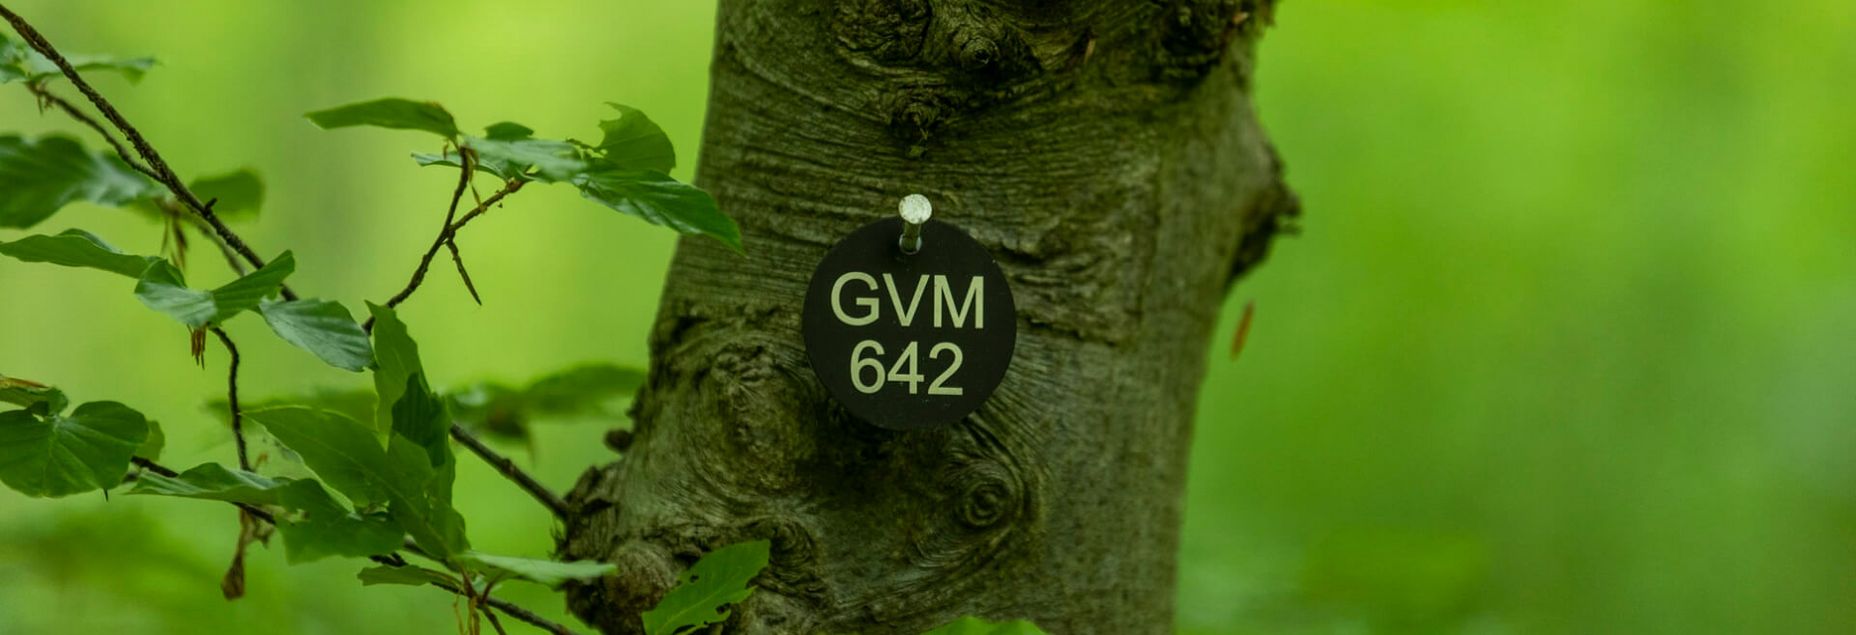 Baum GVM 642 - Plakette